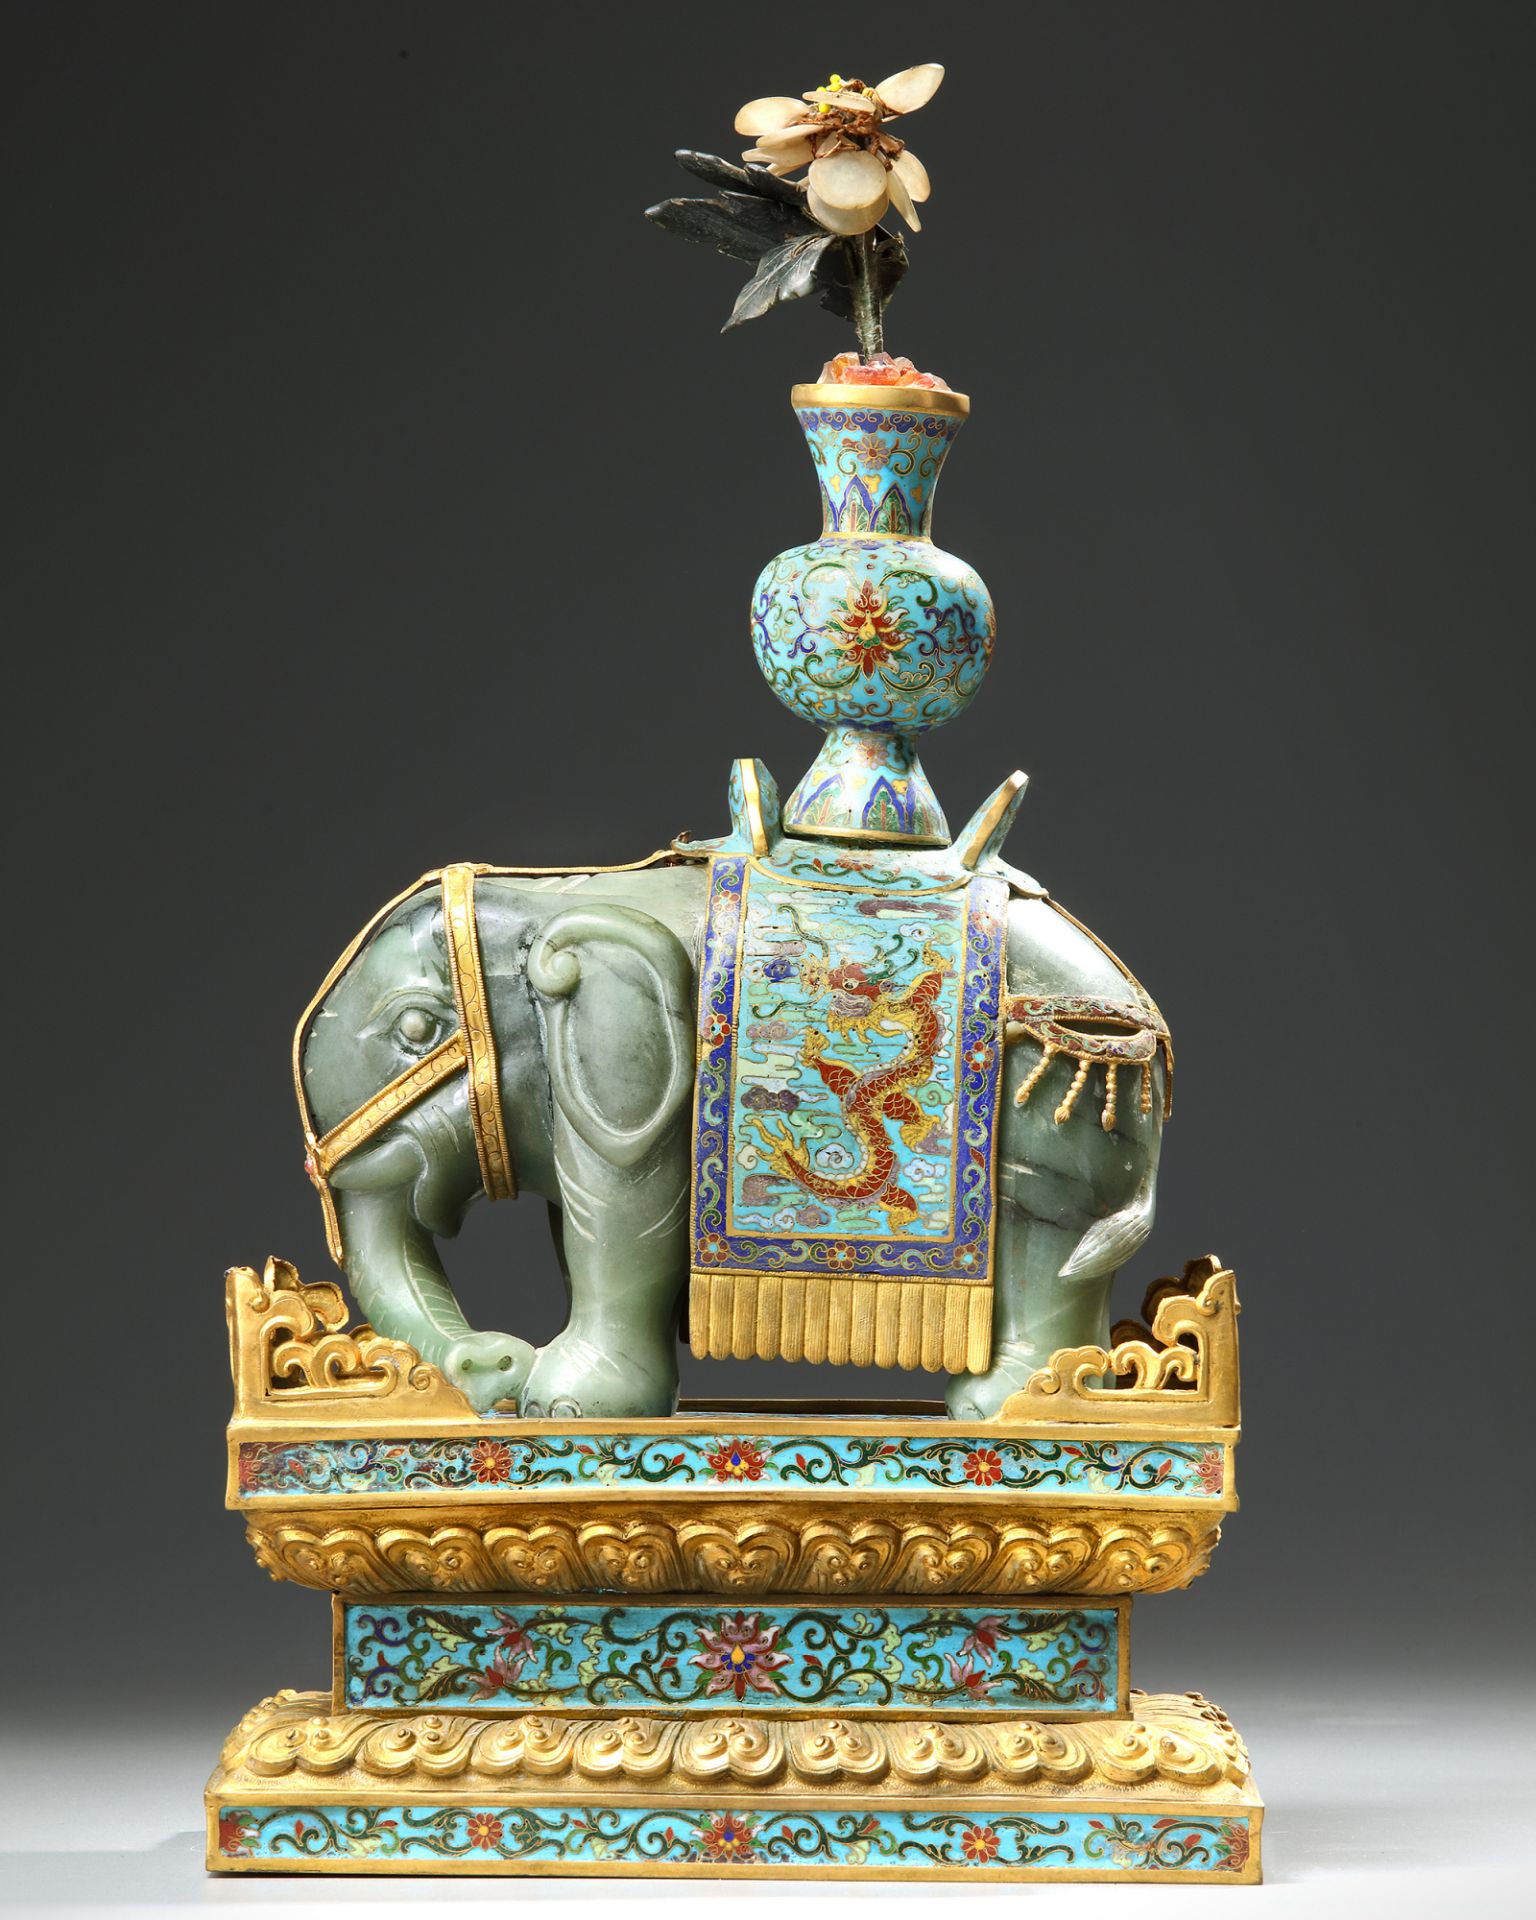 A CHINESE JADE AND CLOISONNÉ CAPARISONED ELEPHANT ON A CLOISONNÉ BASE